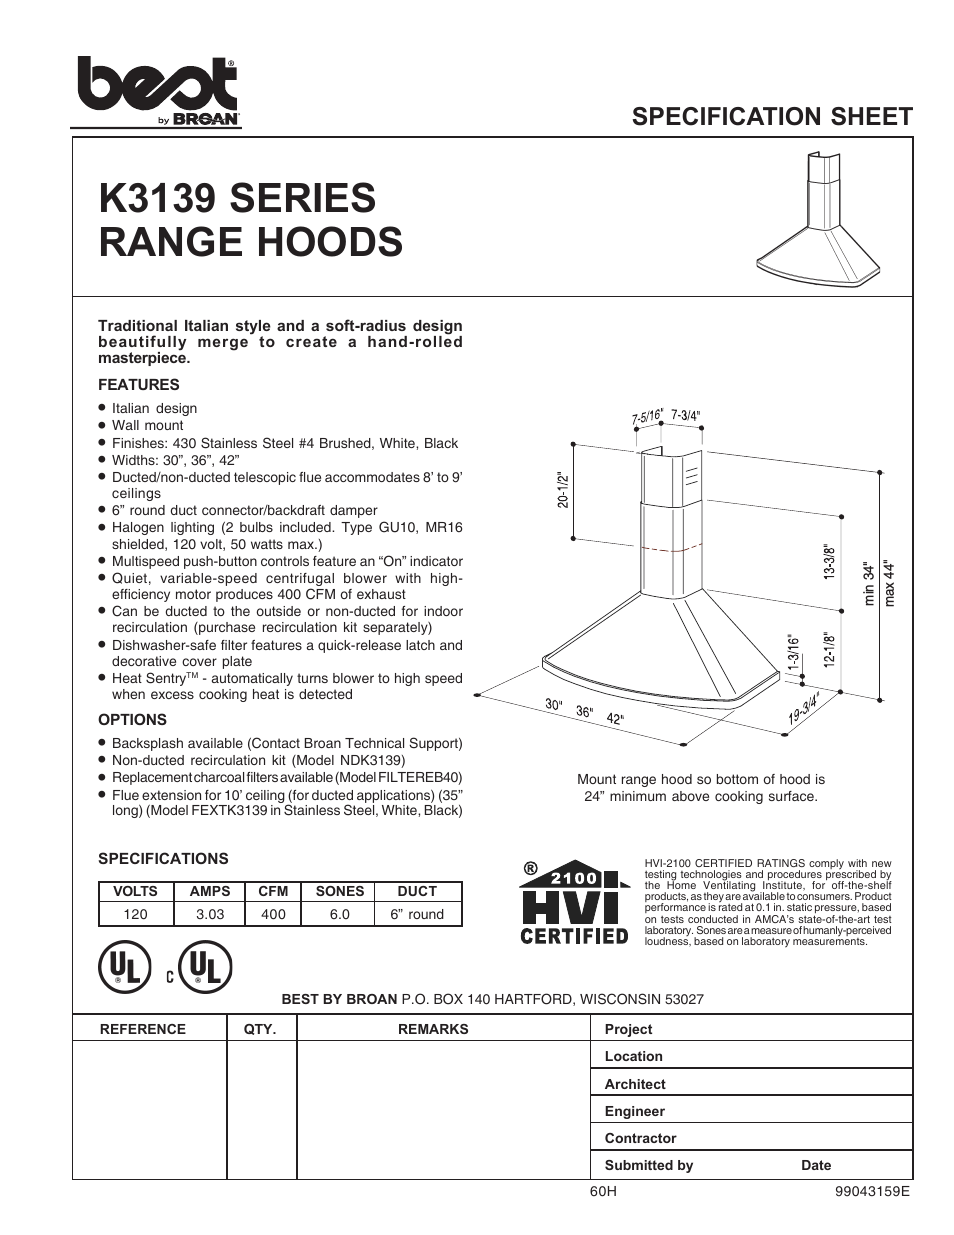 K3139 Series